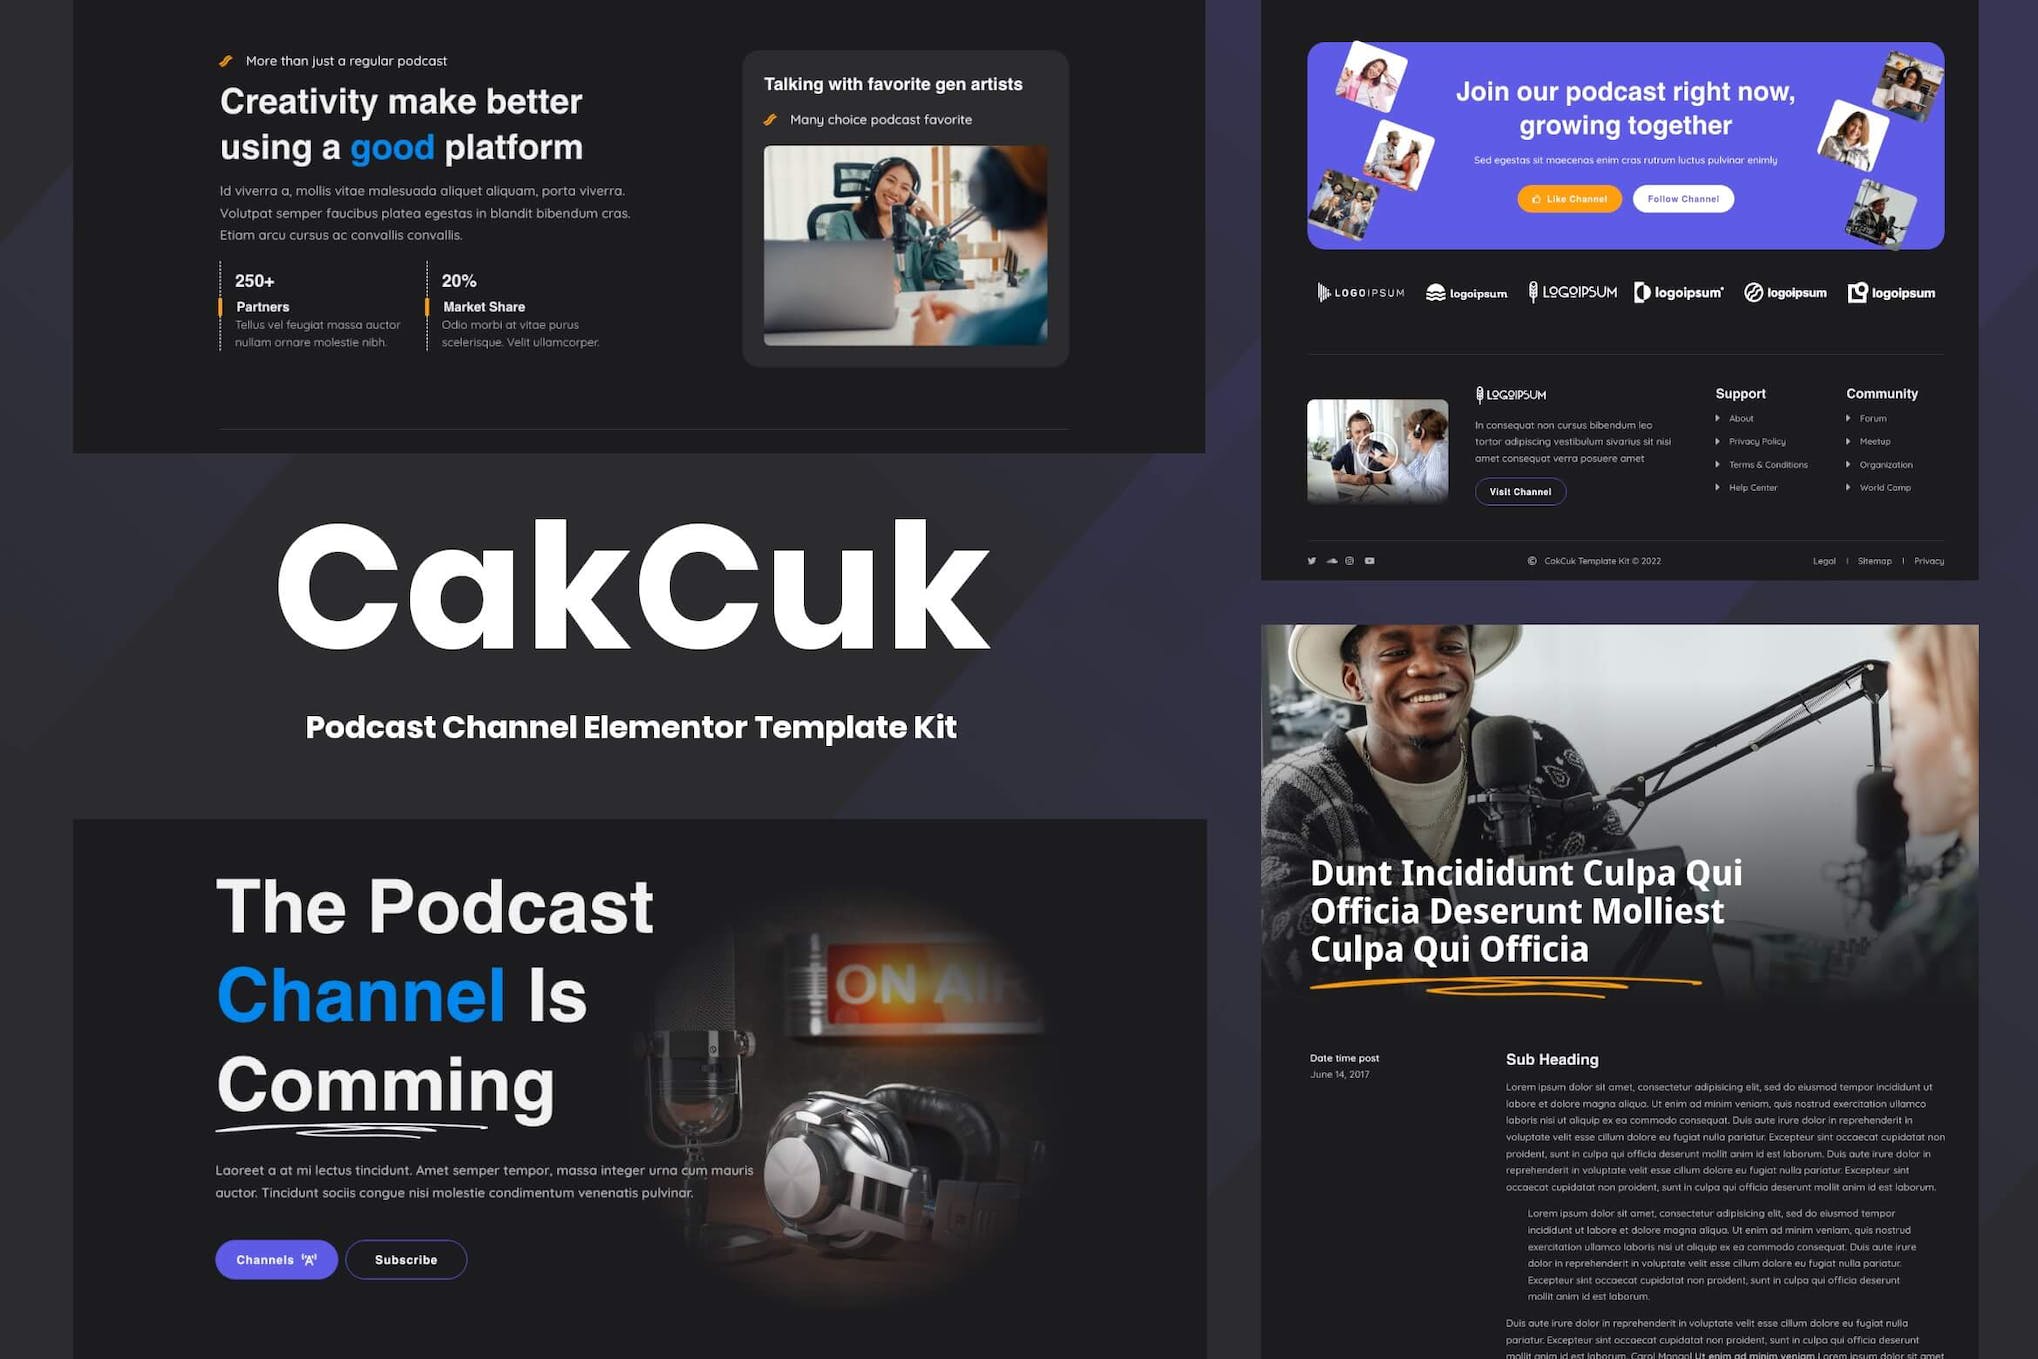 CakCuk - Podcast Channel Elementor Template Kit